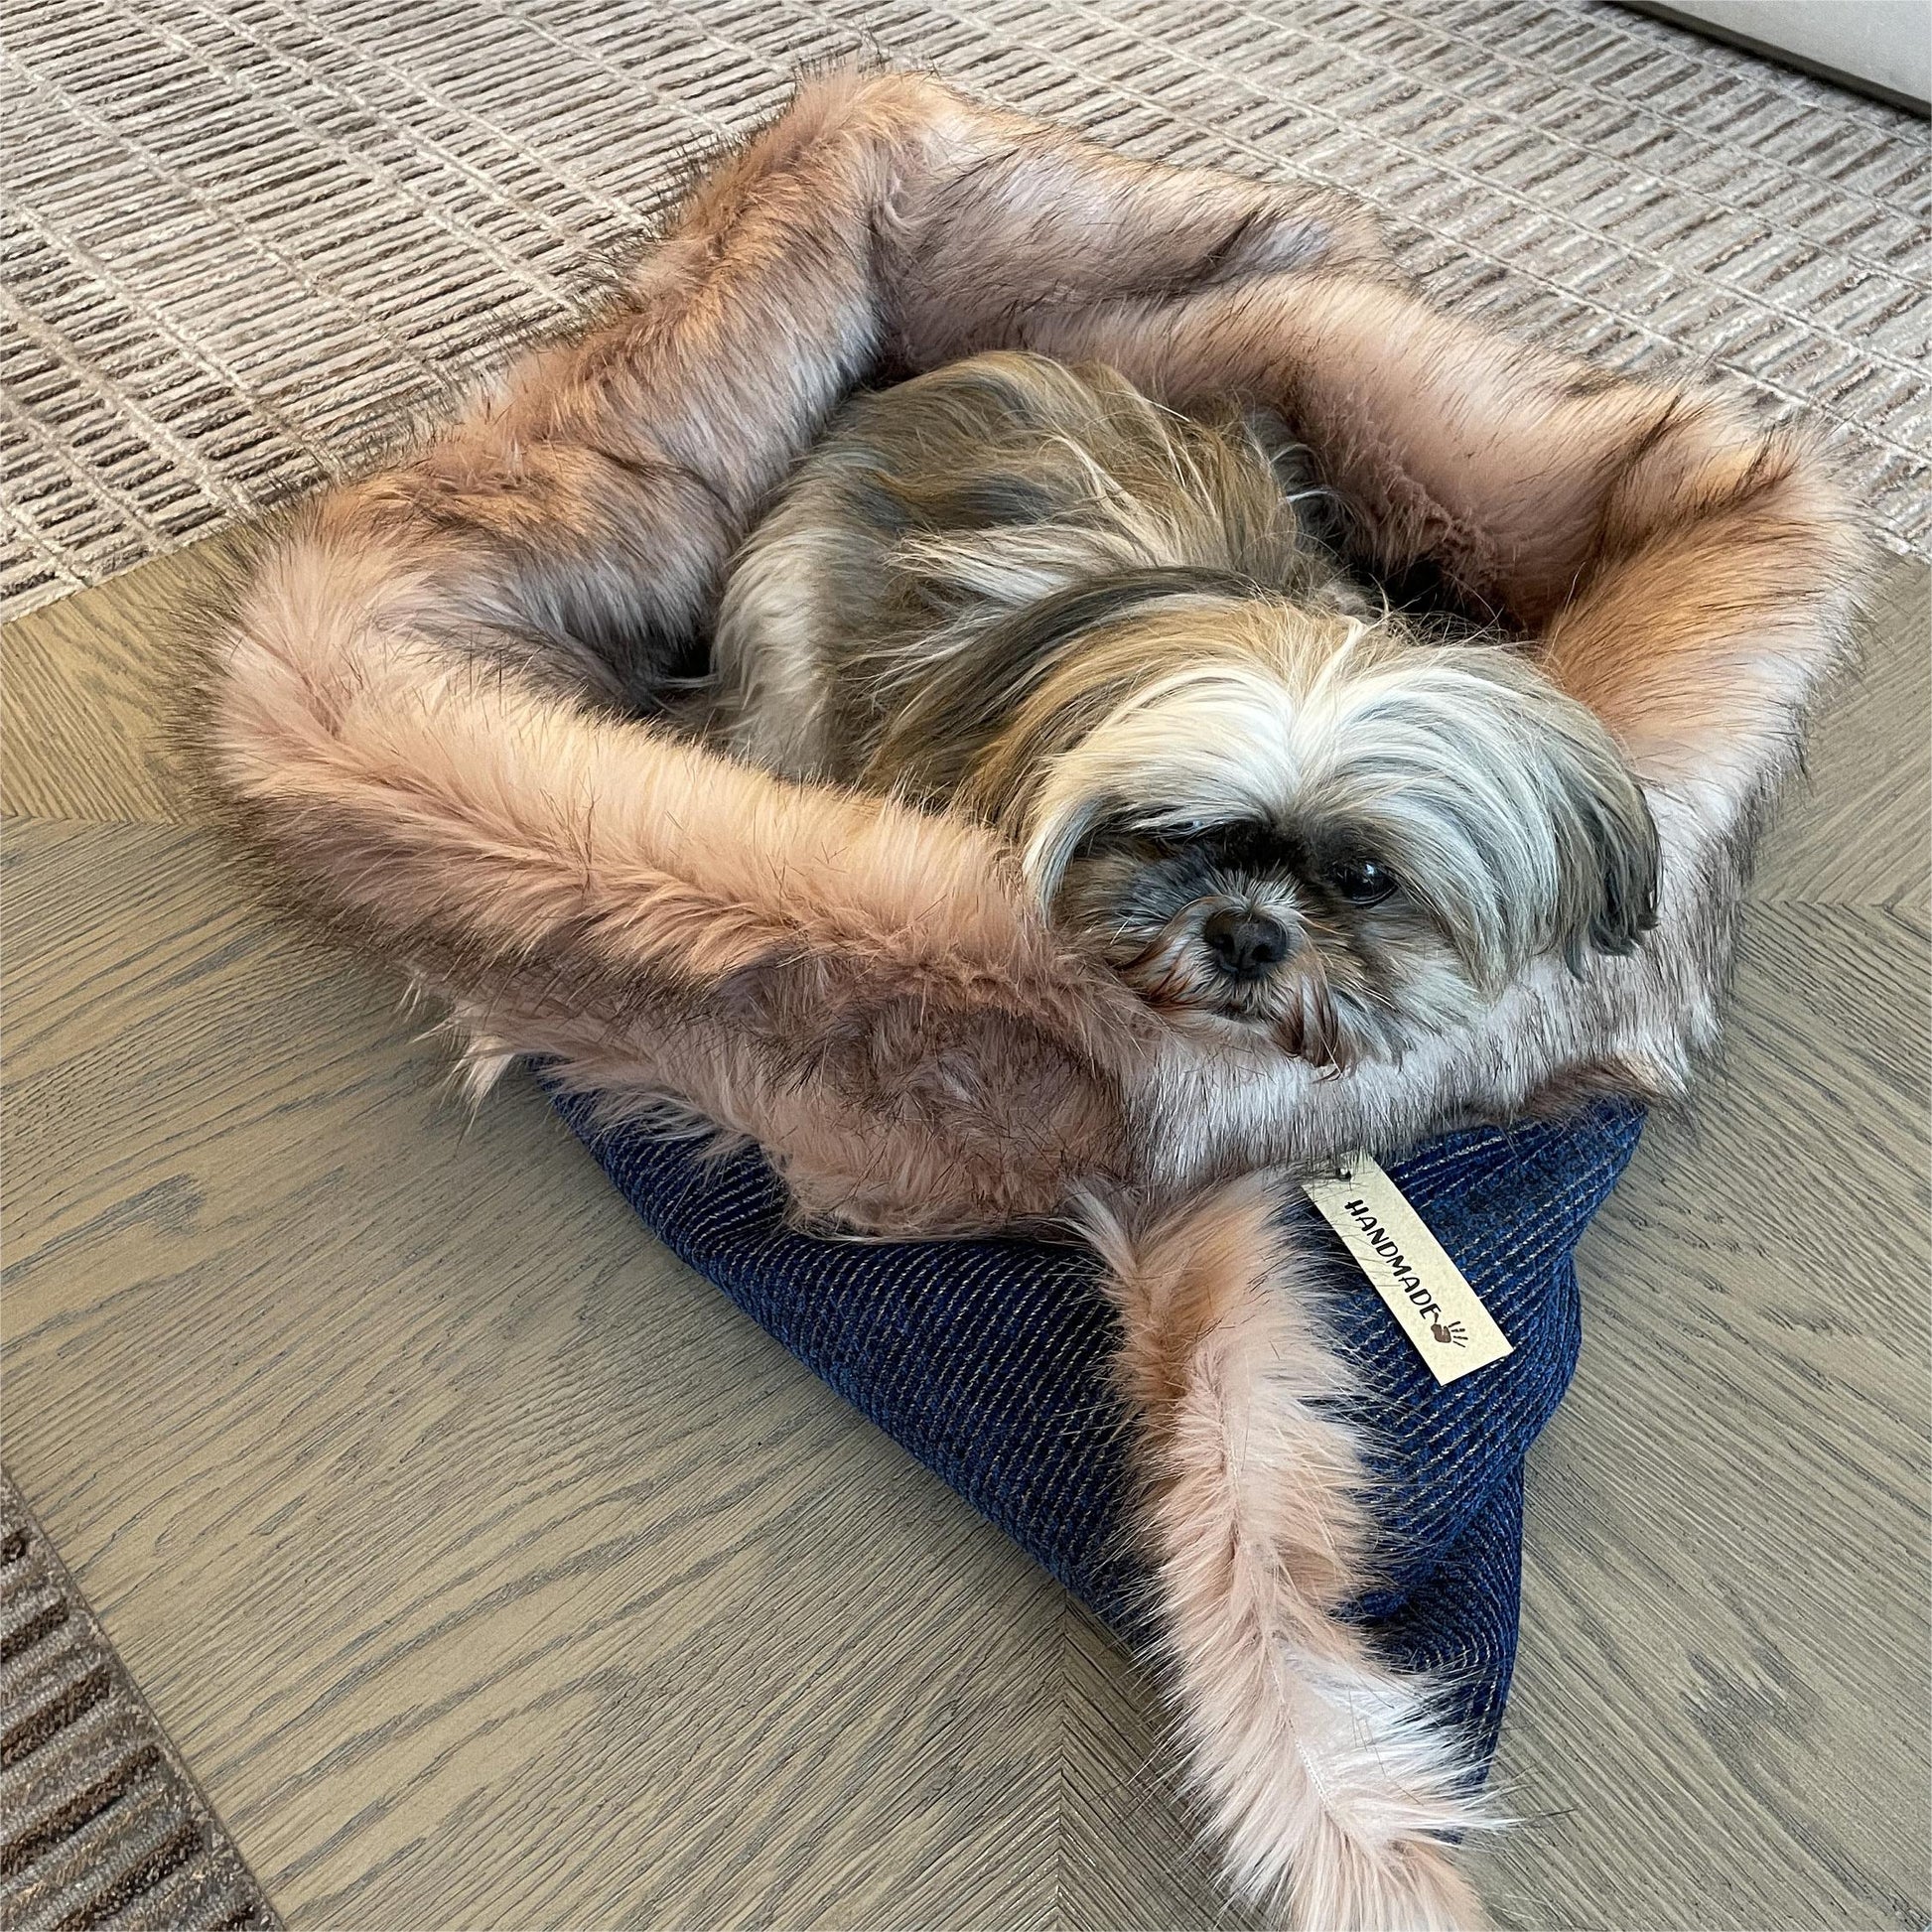 Handmade Luxury Snuggle Pet Bed